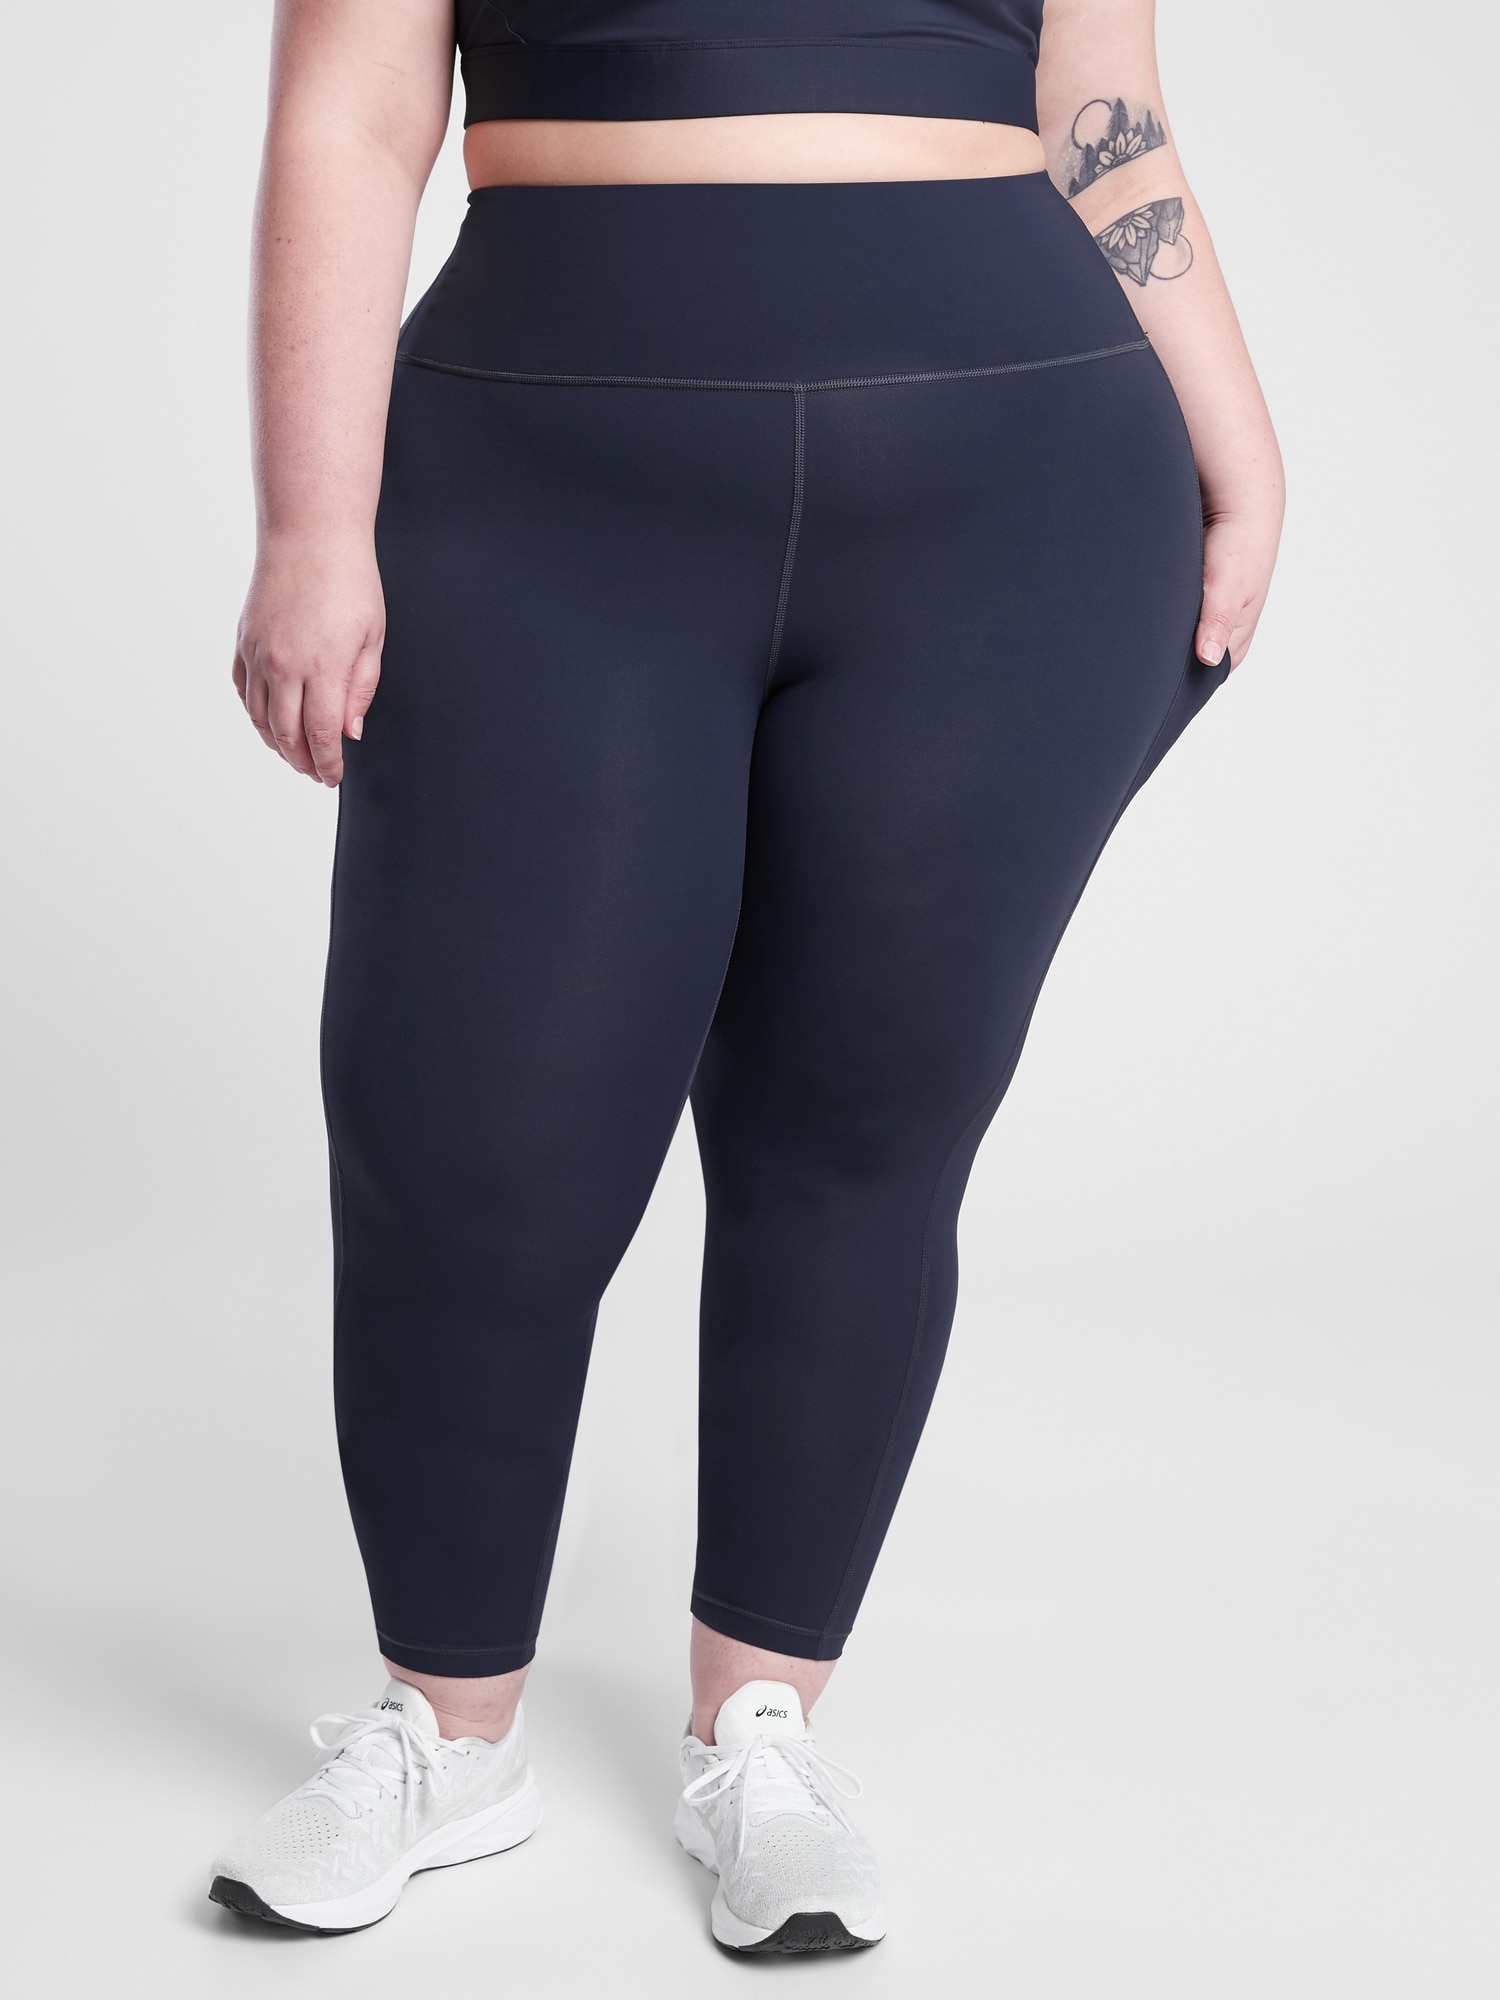 Athleta Ultimate Stash Pocket 7/8 Tight - ShopStyle Plus Size Pants